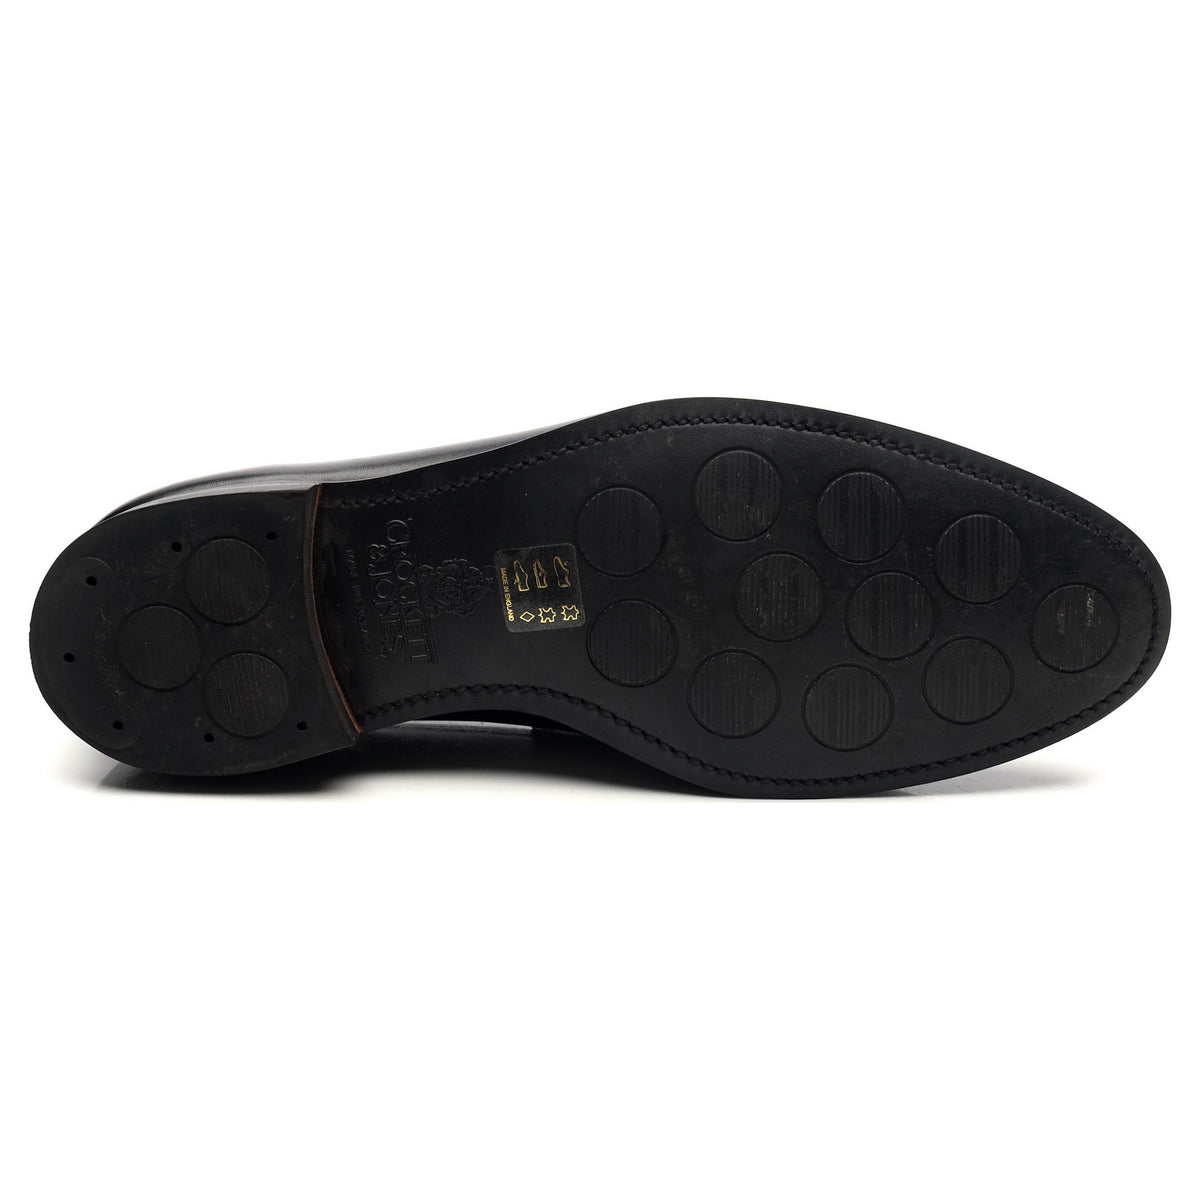 &#39;Sydney&#39; Black Leather Loafers UK 7 E